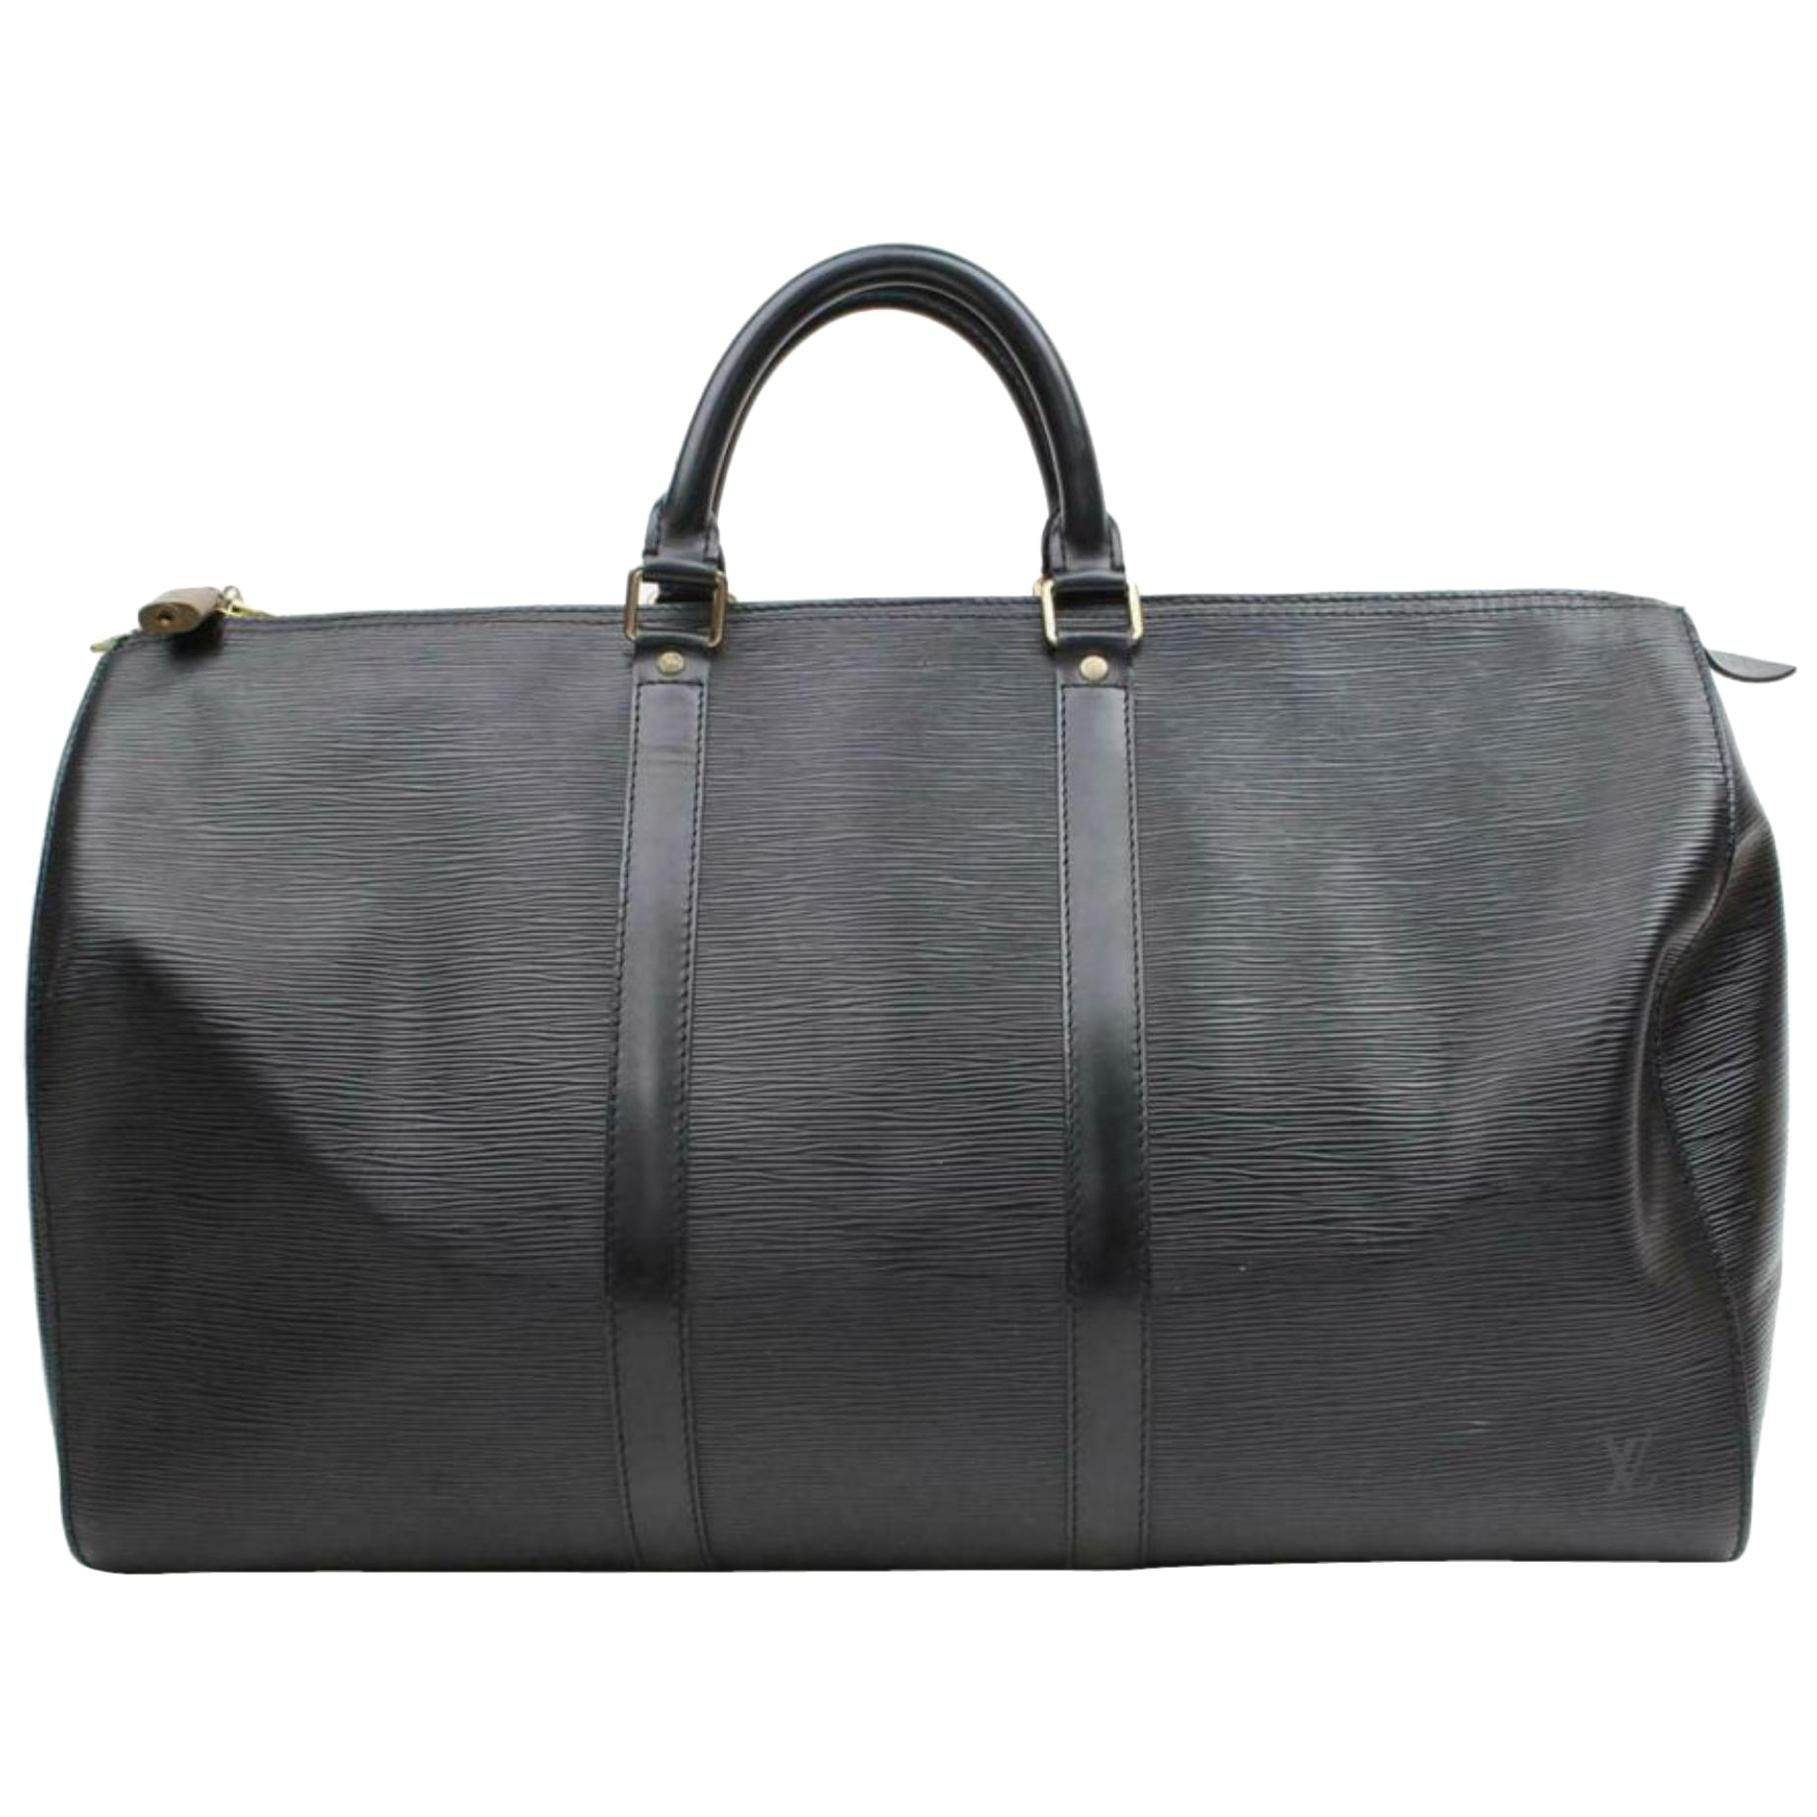 Louis Vuitton Keepall Duffle Noir 50 Mm 870239 Black Leather Weekend/Travel Bag For Sale